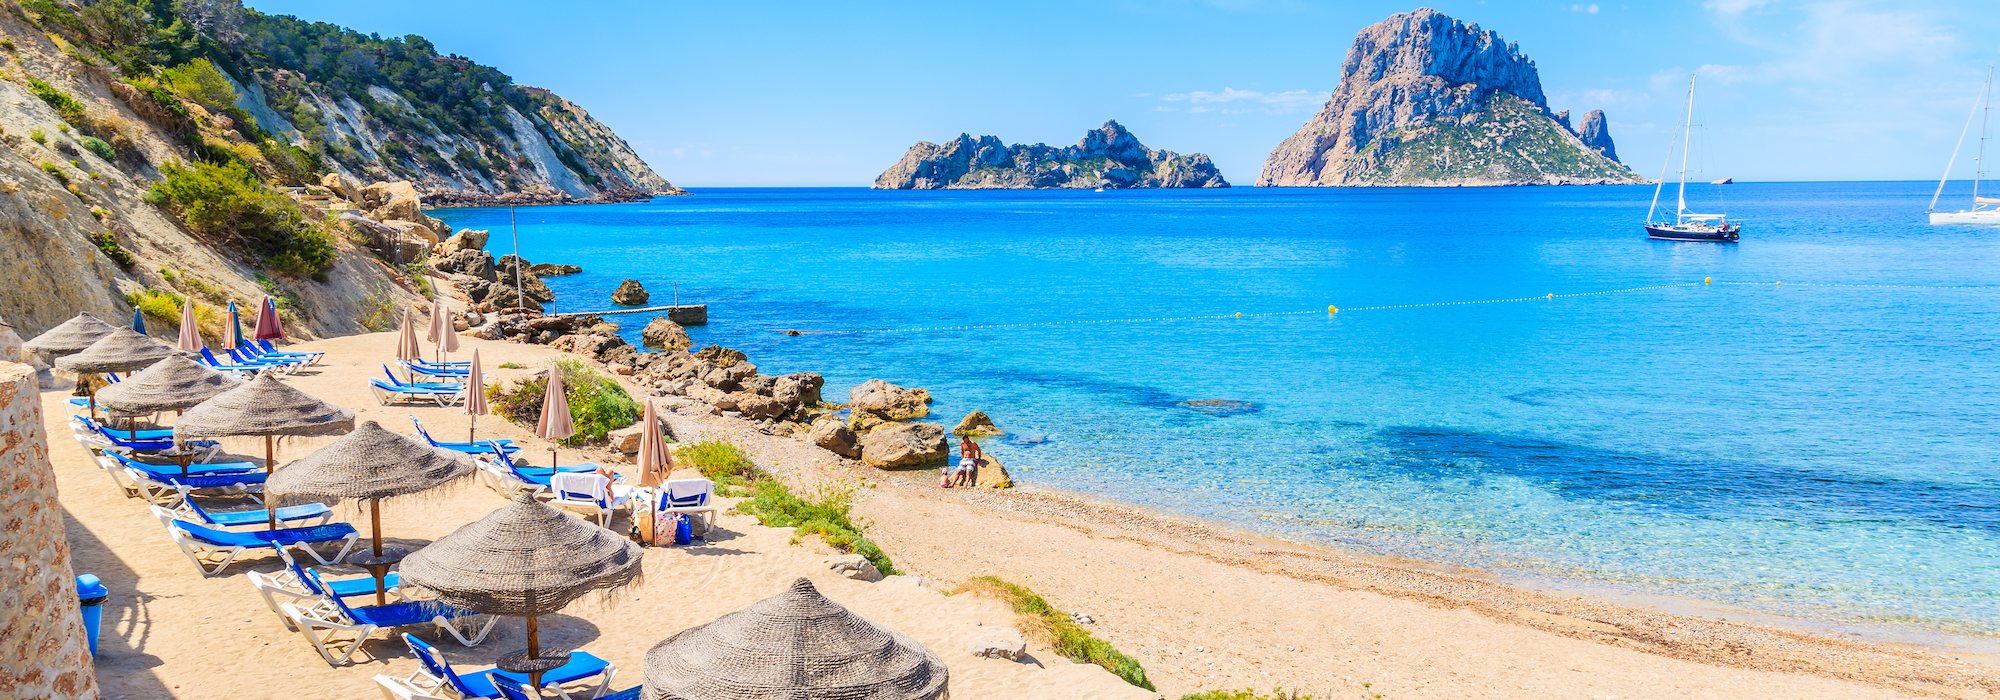 Cala d'Hort beach, Ibiza